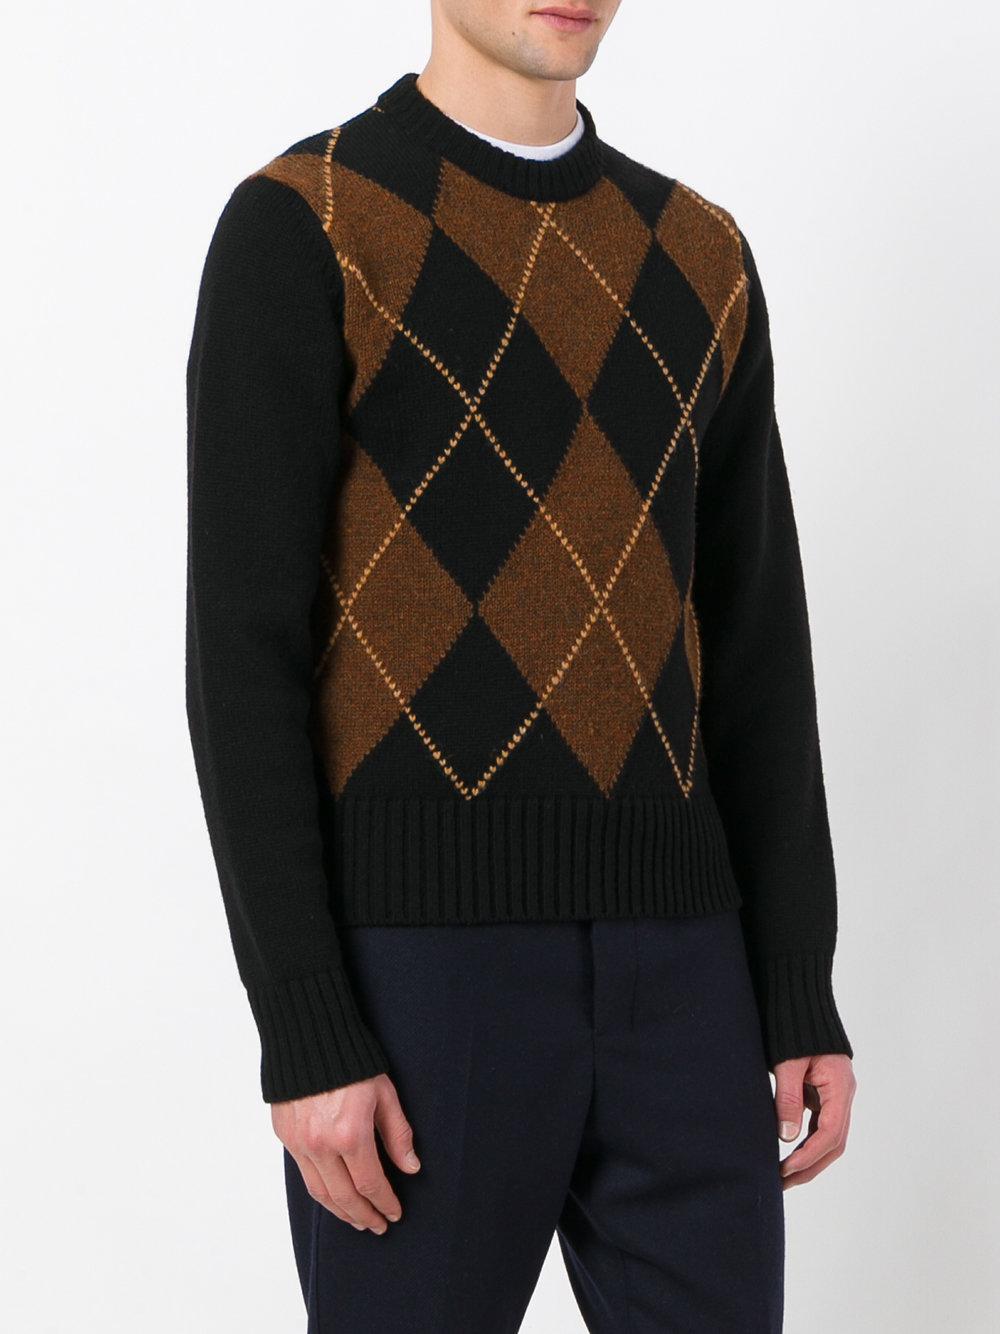 Lyst - Ami Argyle Pattern Crew Neck Sweater in Brown for Men